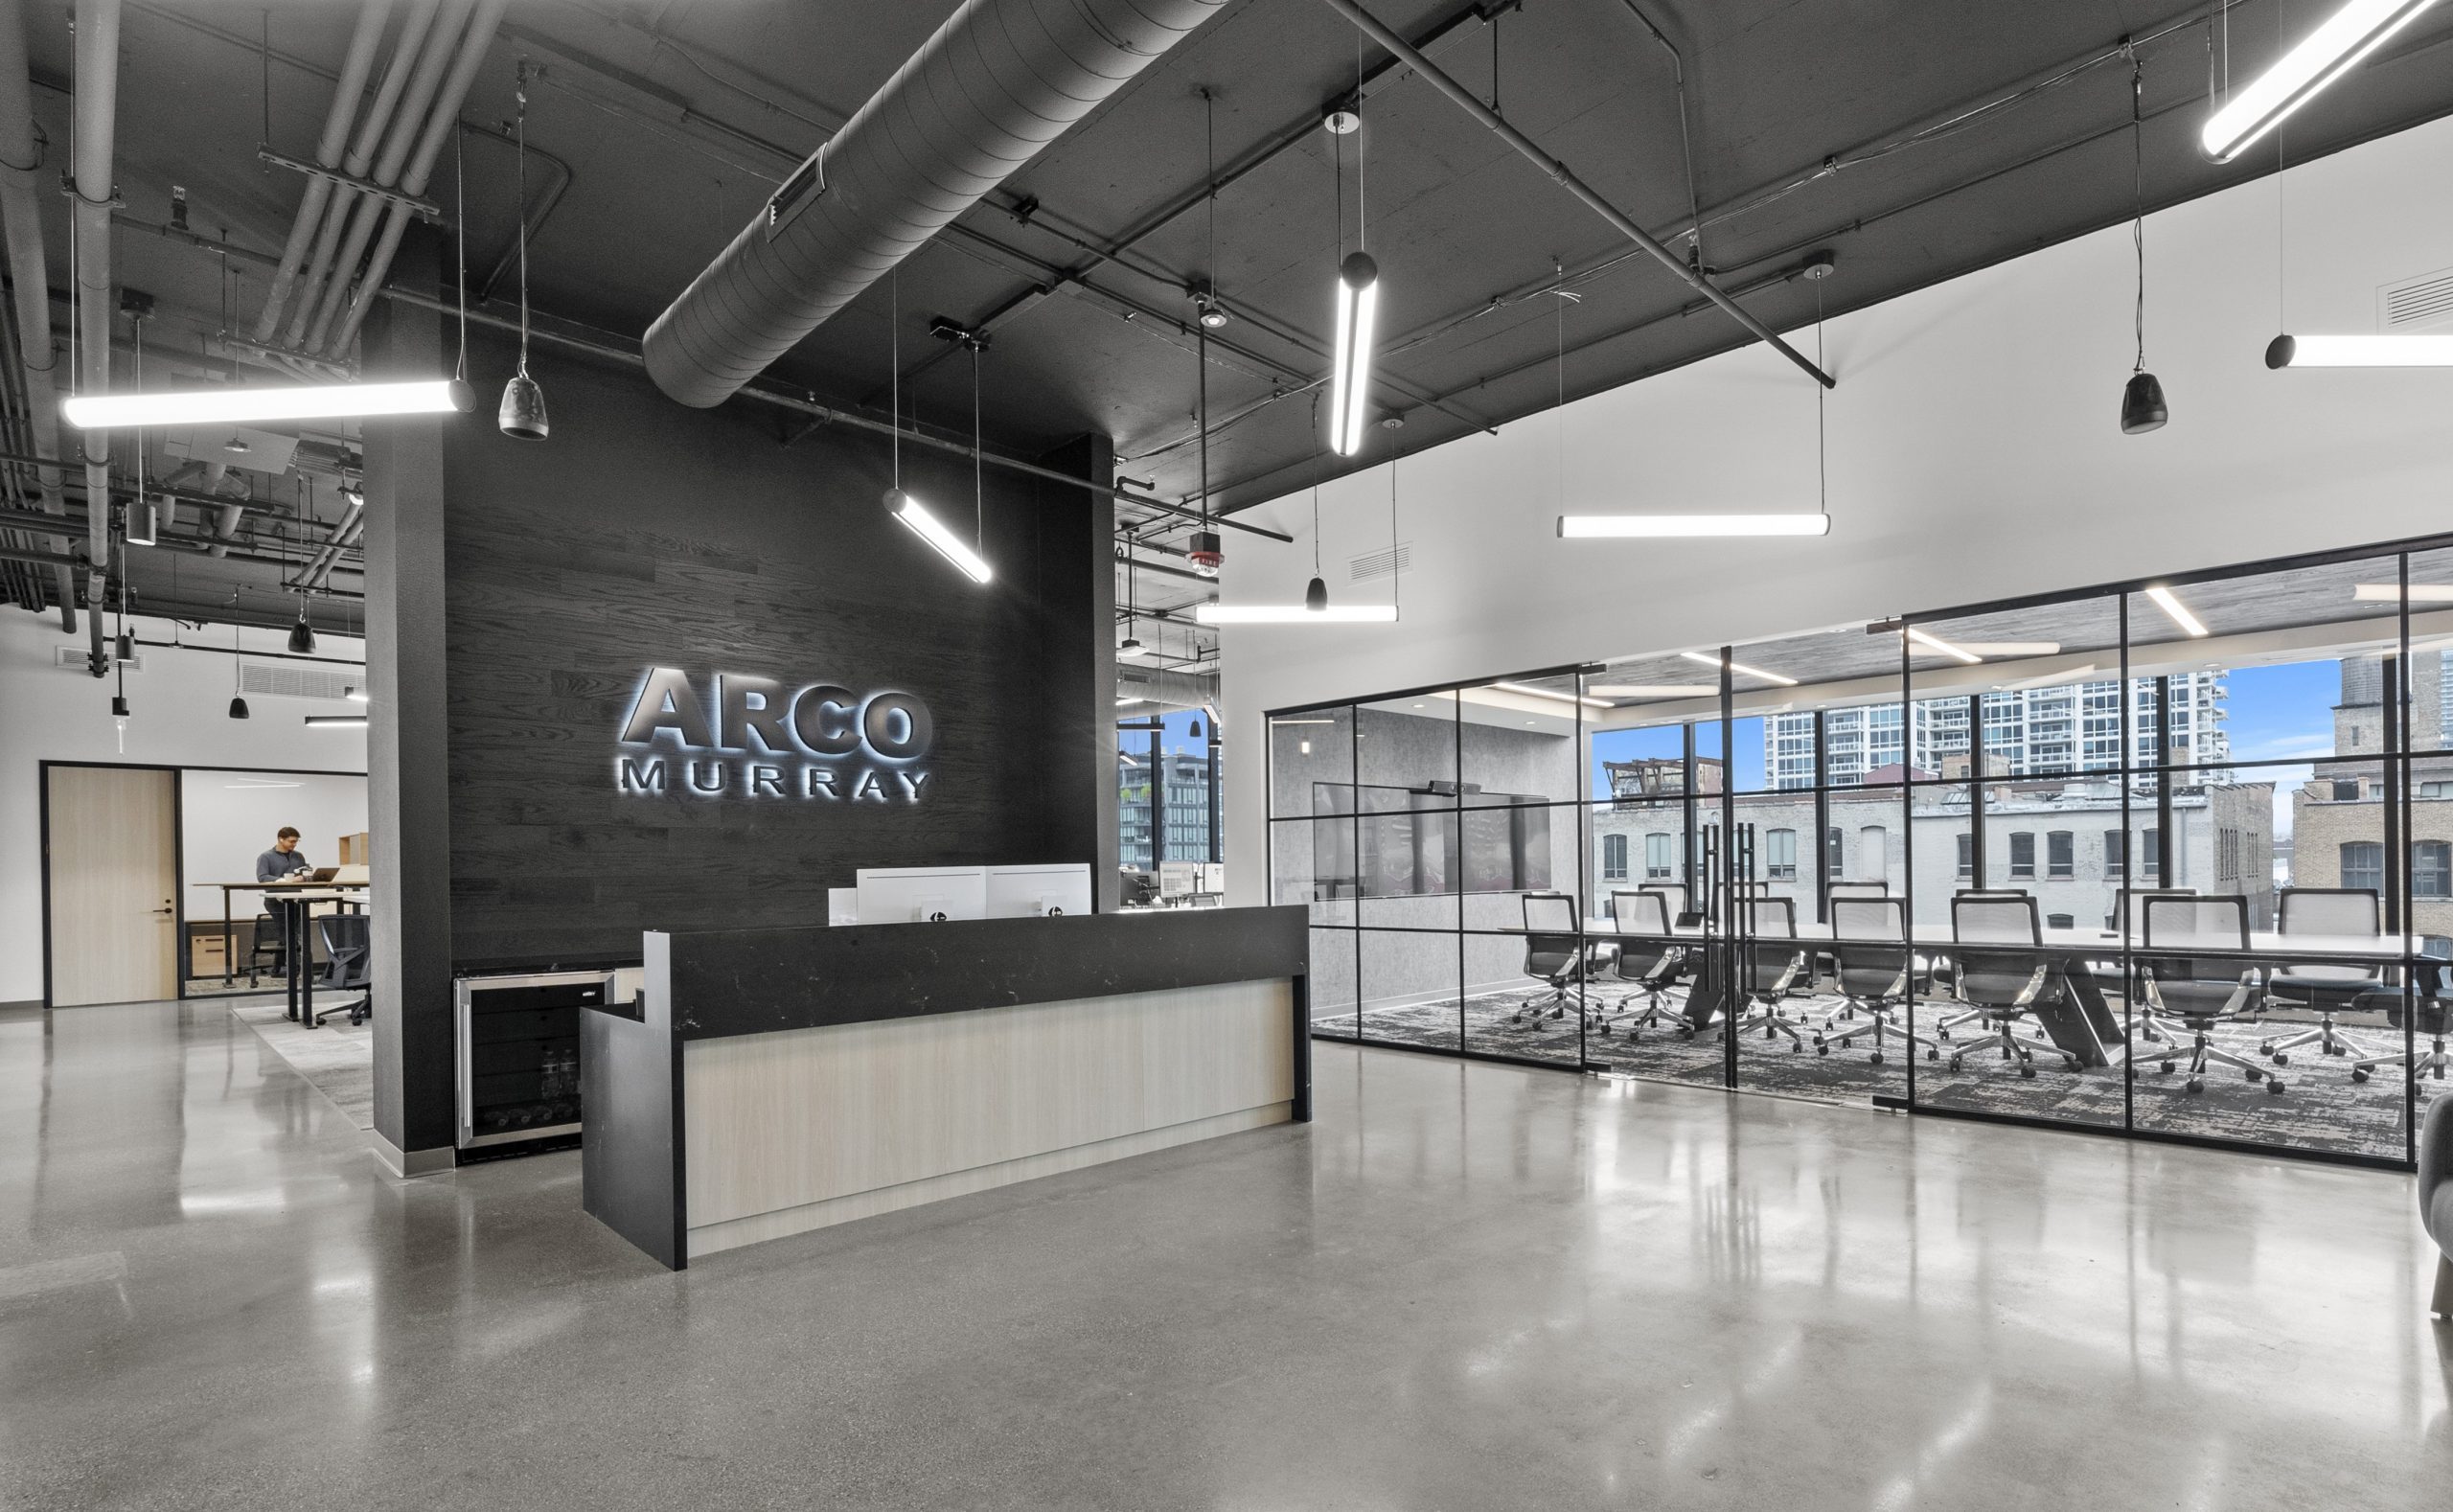 ARCO/Murray 311 W. Huron Office Reception Area